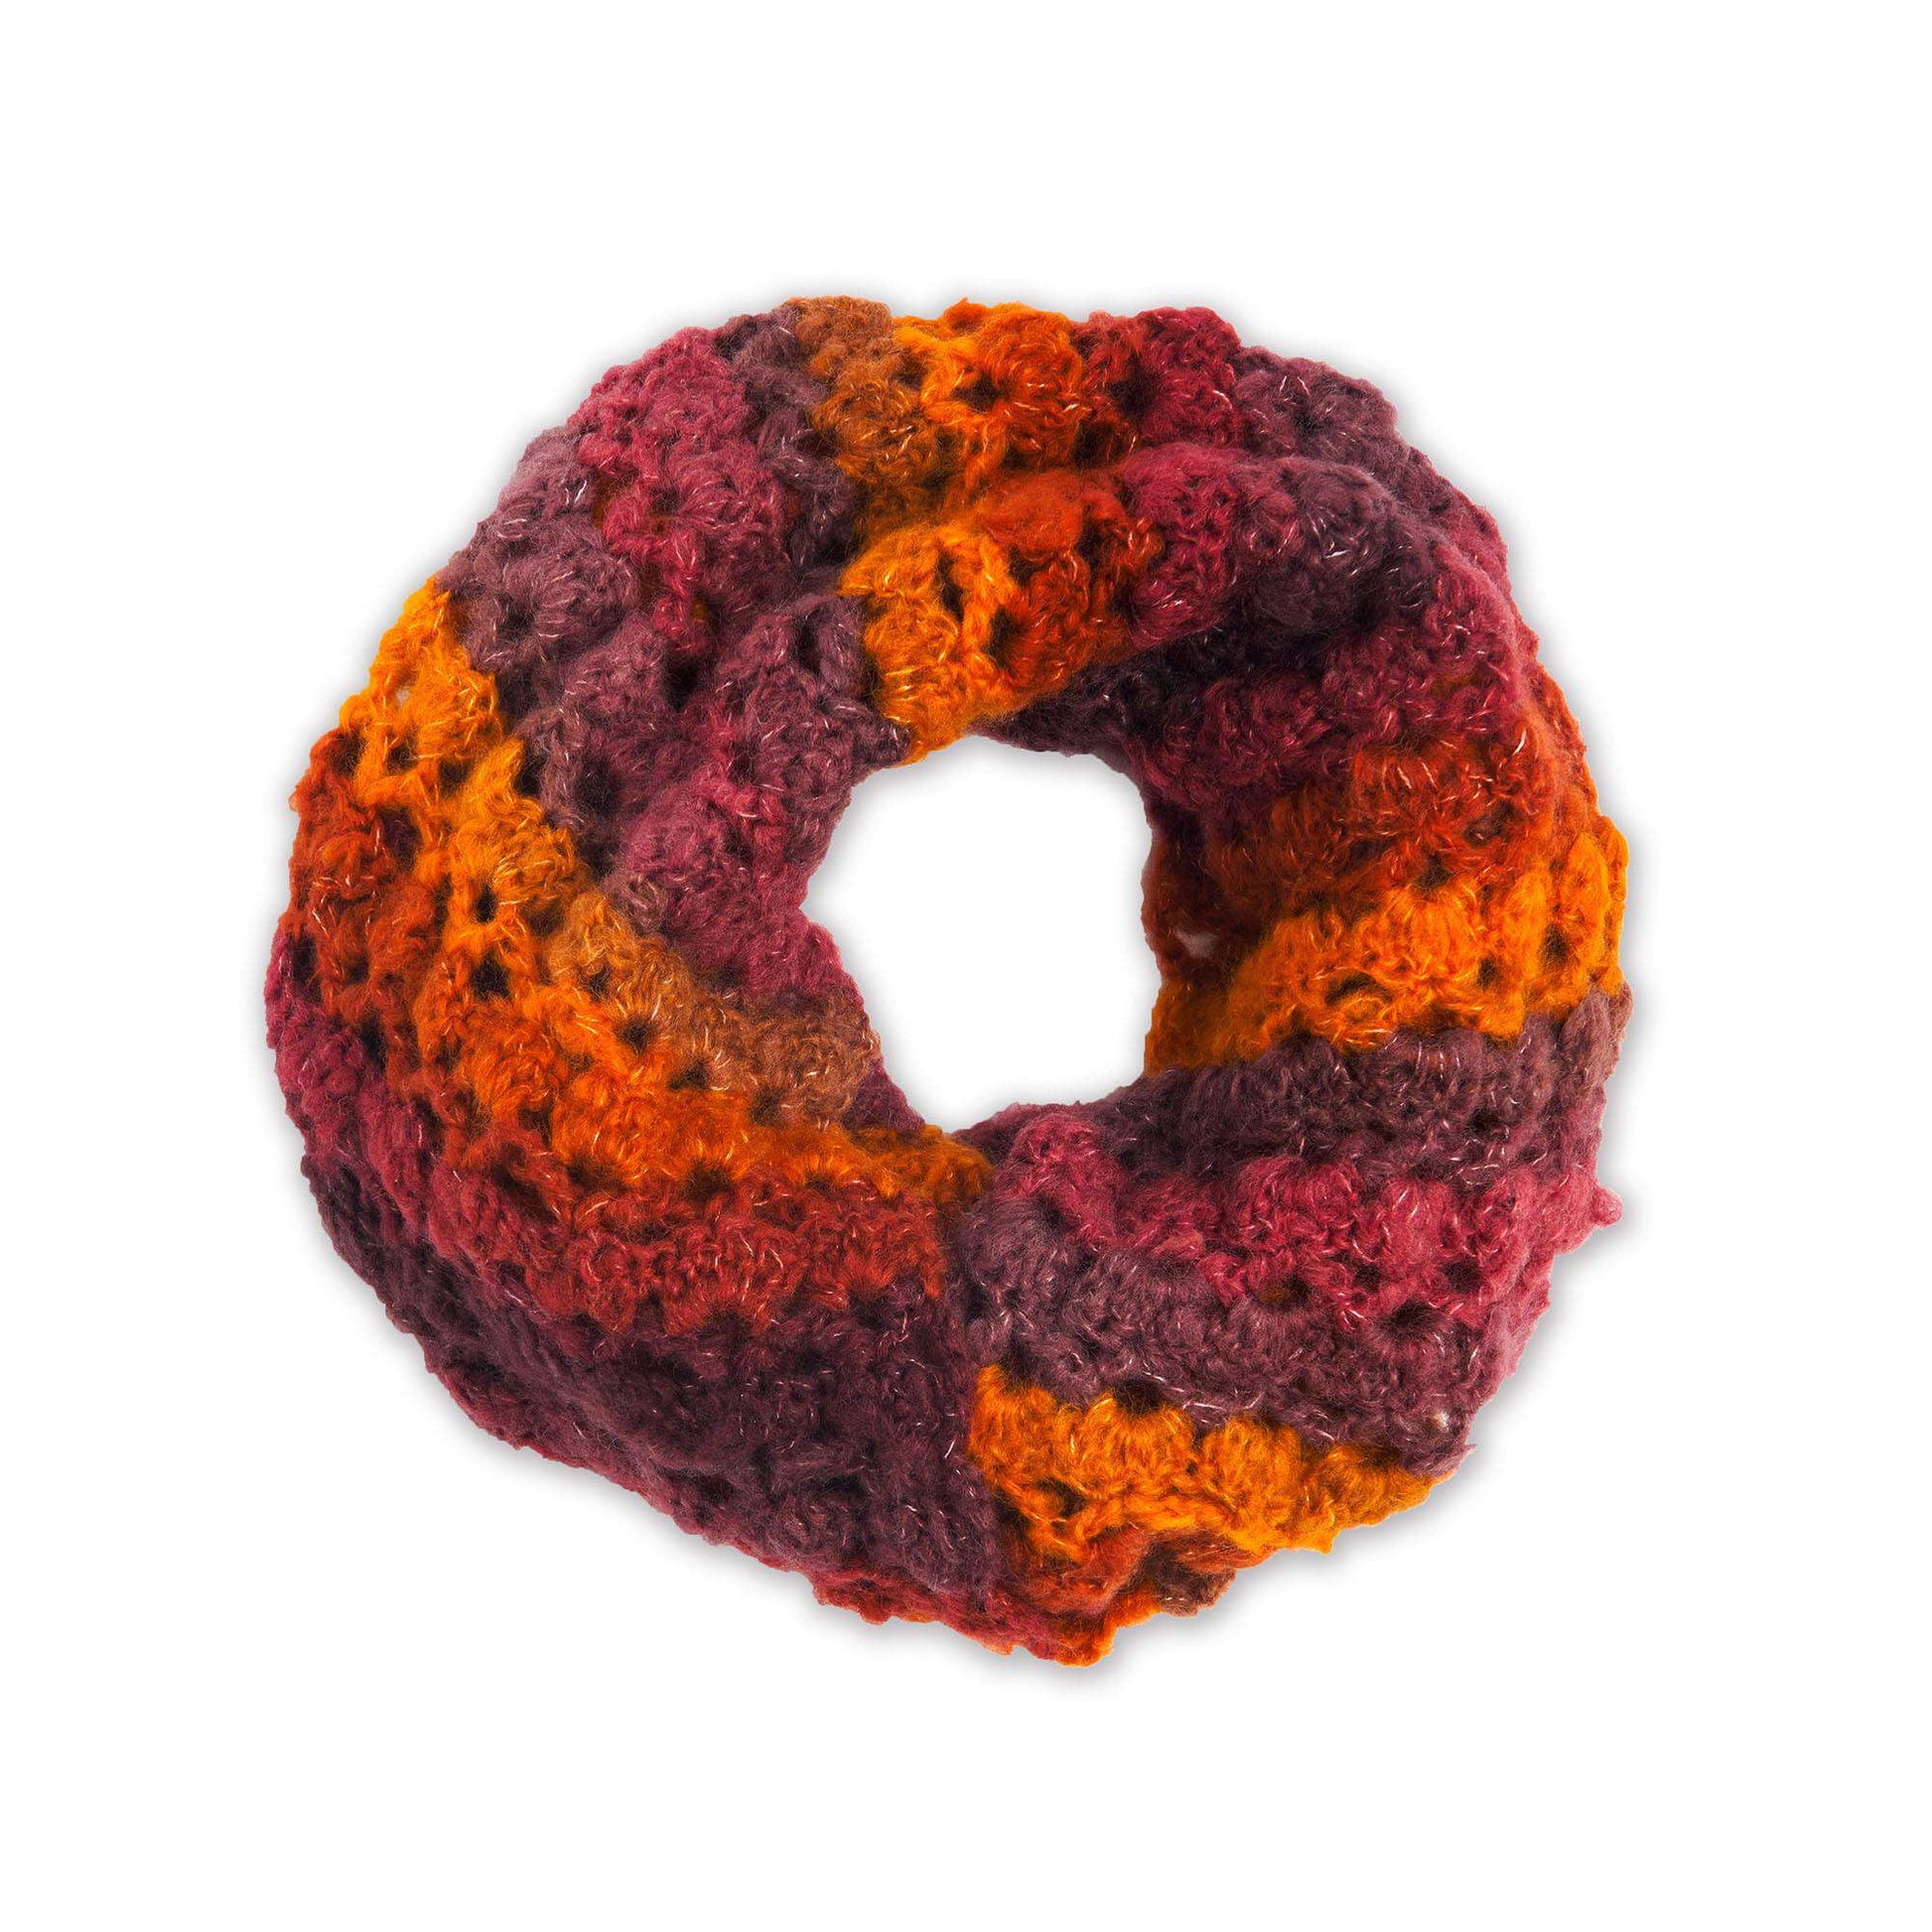 Fur-Ever Fur Infinty Scarf Crochet Pattern  Scarf crochet pattern, Crochet,  Crochet infinity scarf